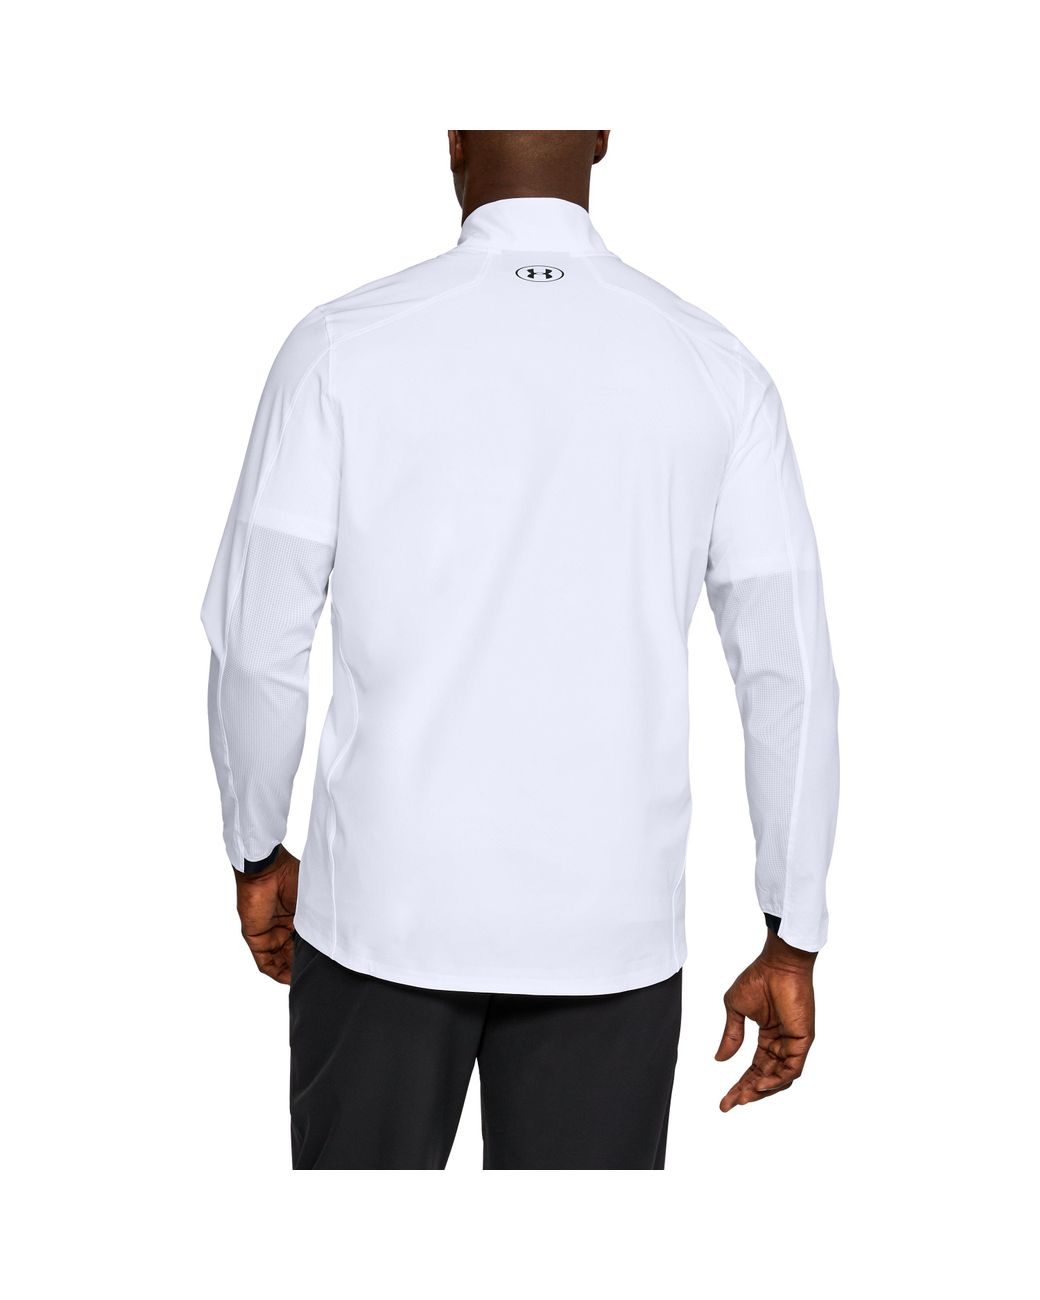 Under Armour Men's Ua Coldgear® Reactor Jacket in White for Men